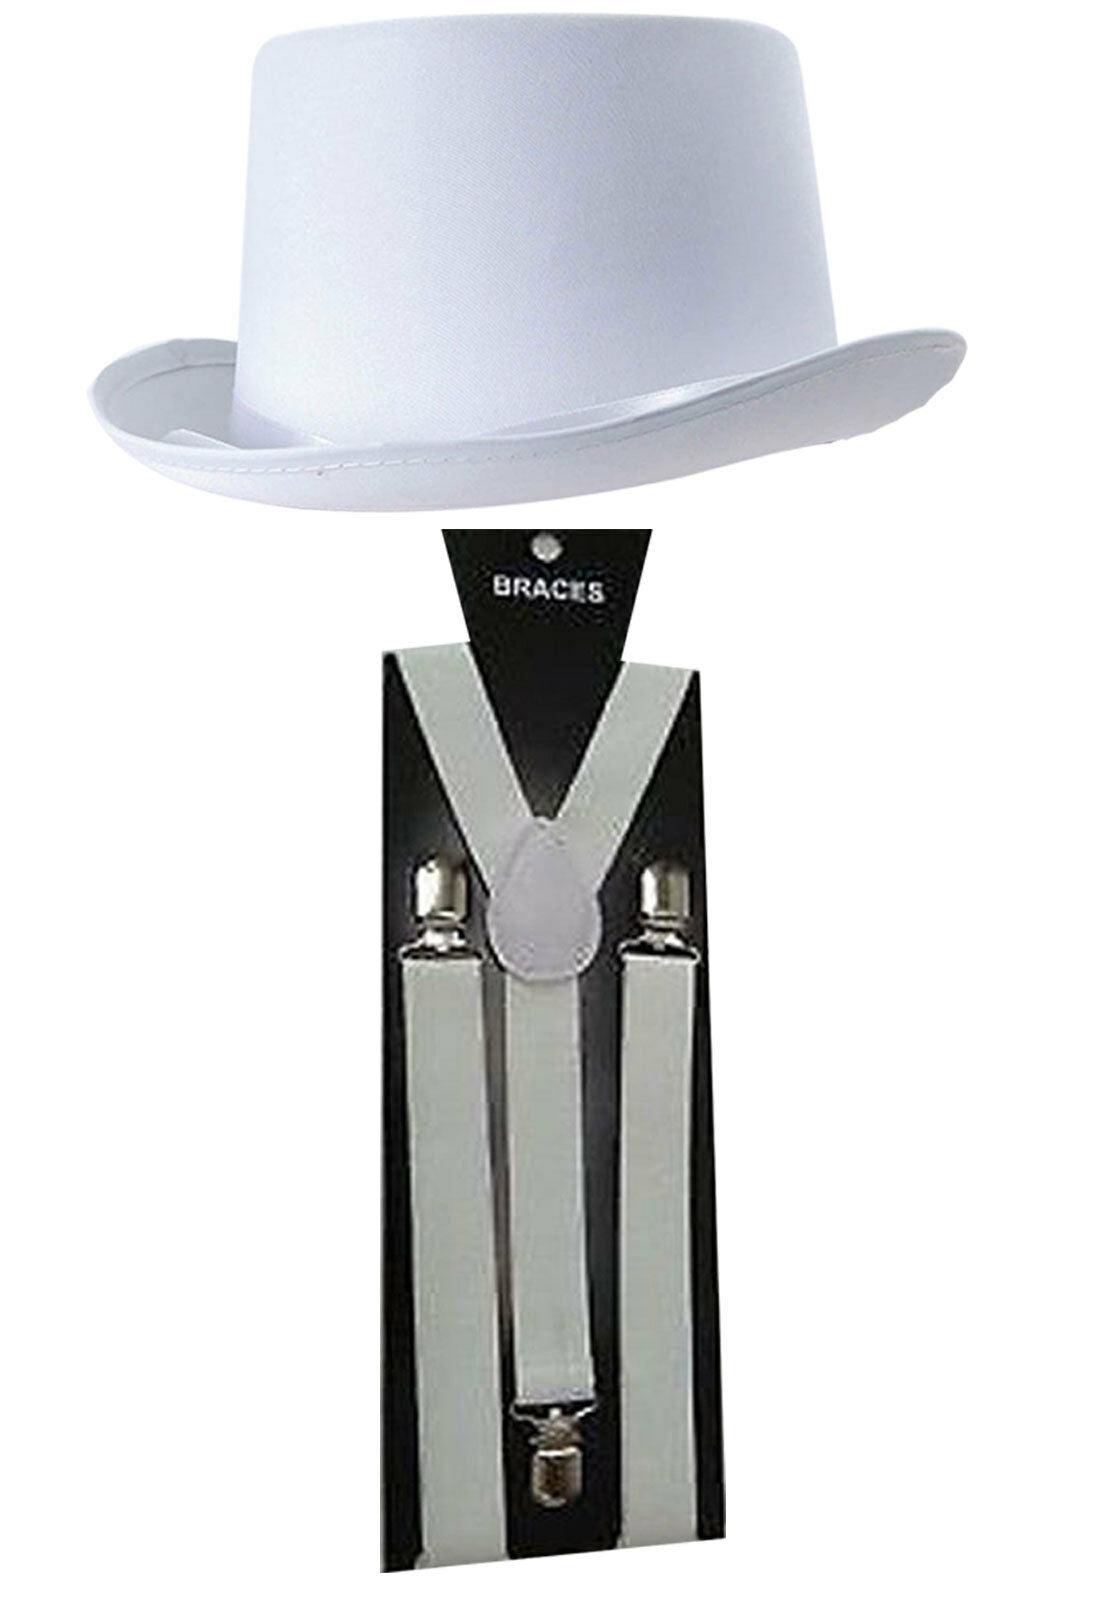 Satin White Hat Braces Tie Cigar Tommy gun Fancy Costume Accessories lot - Labreeze